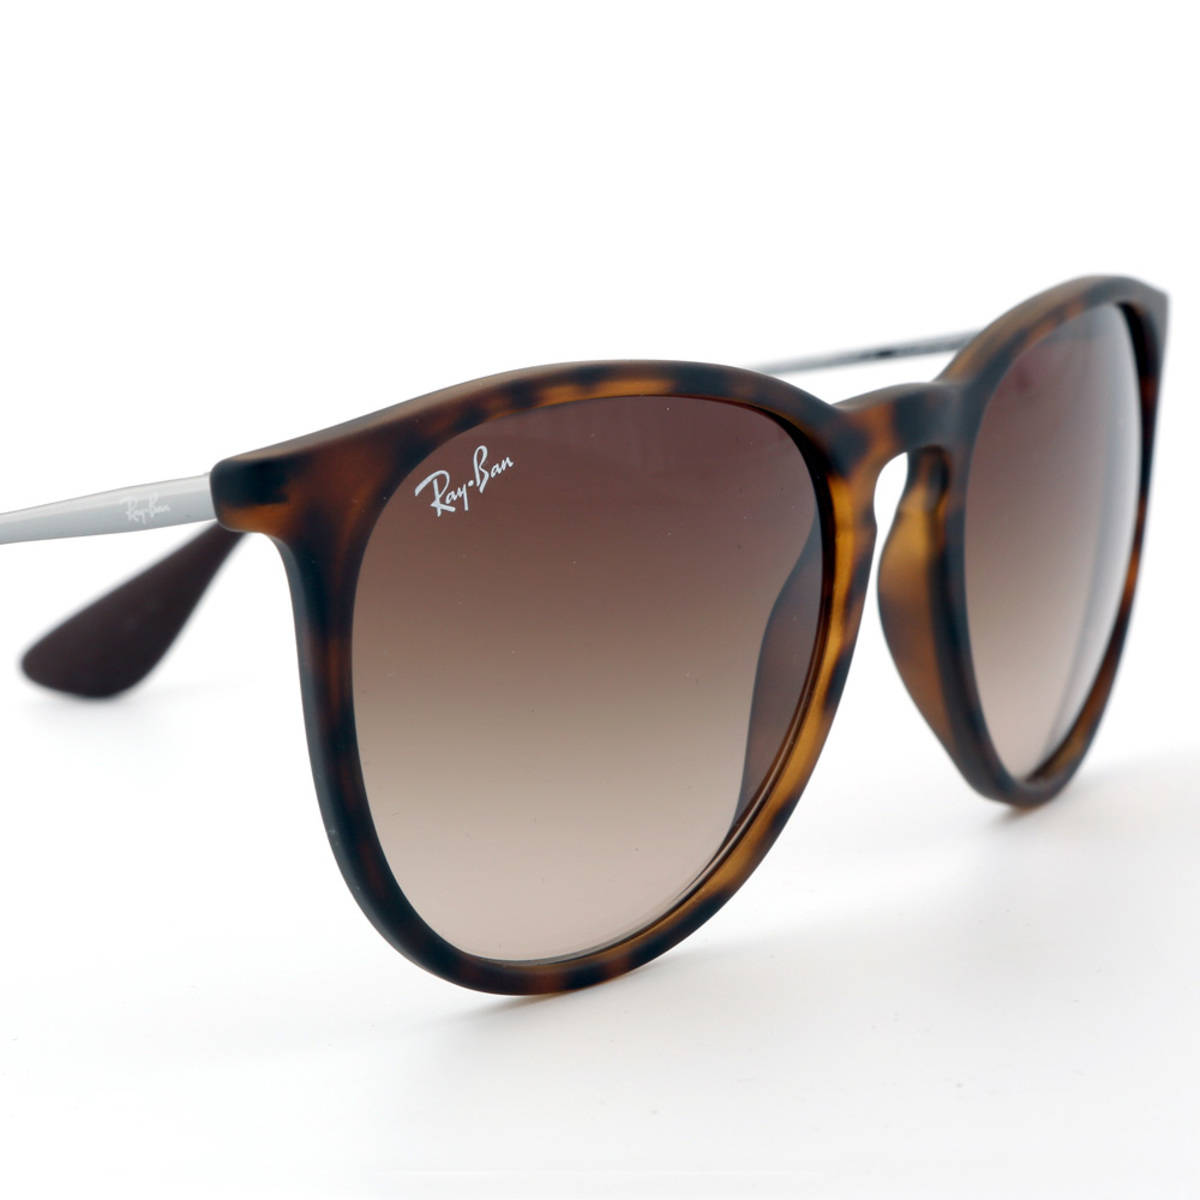 Ray-Ban Erika Havana Sunglasses with Brown Lenses, RB4171 865/13